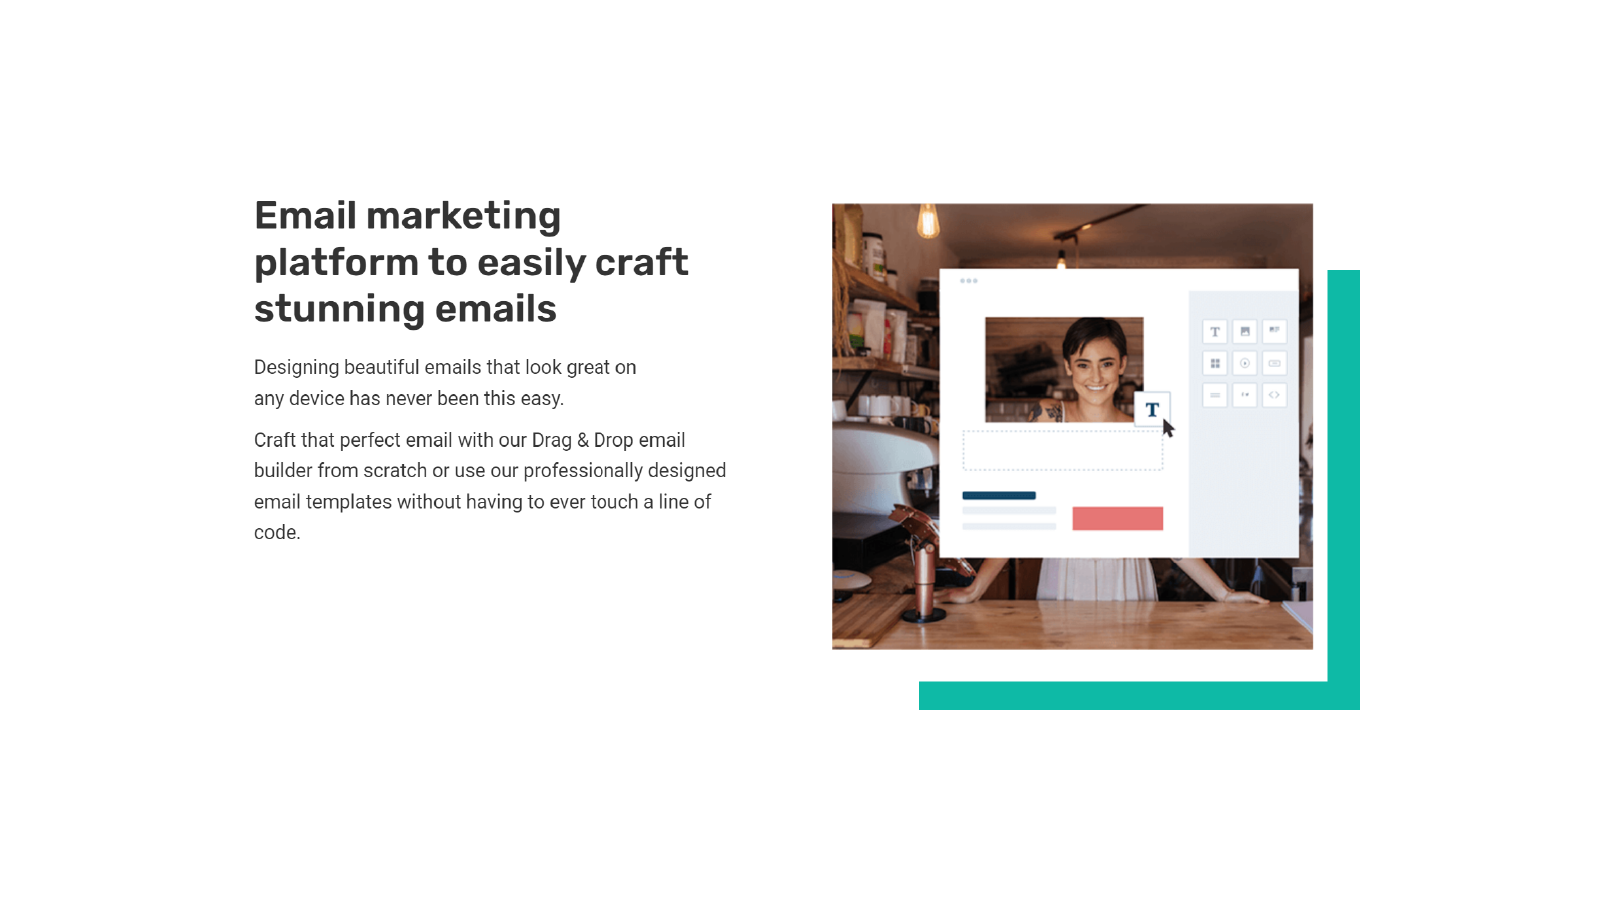 Email marketing platform to easily craft stunning emails